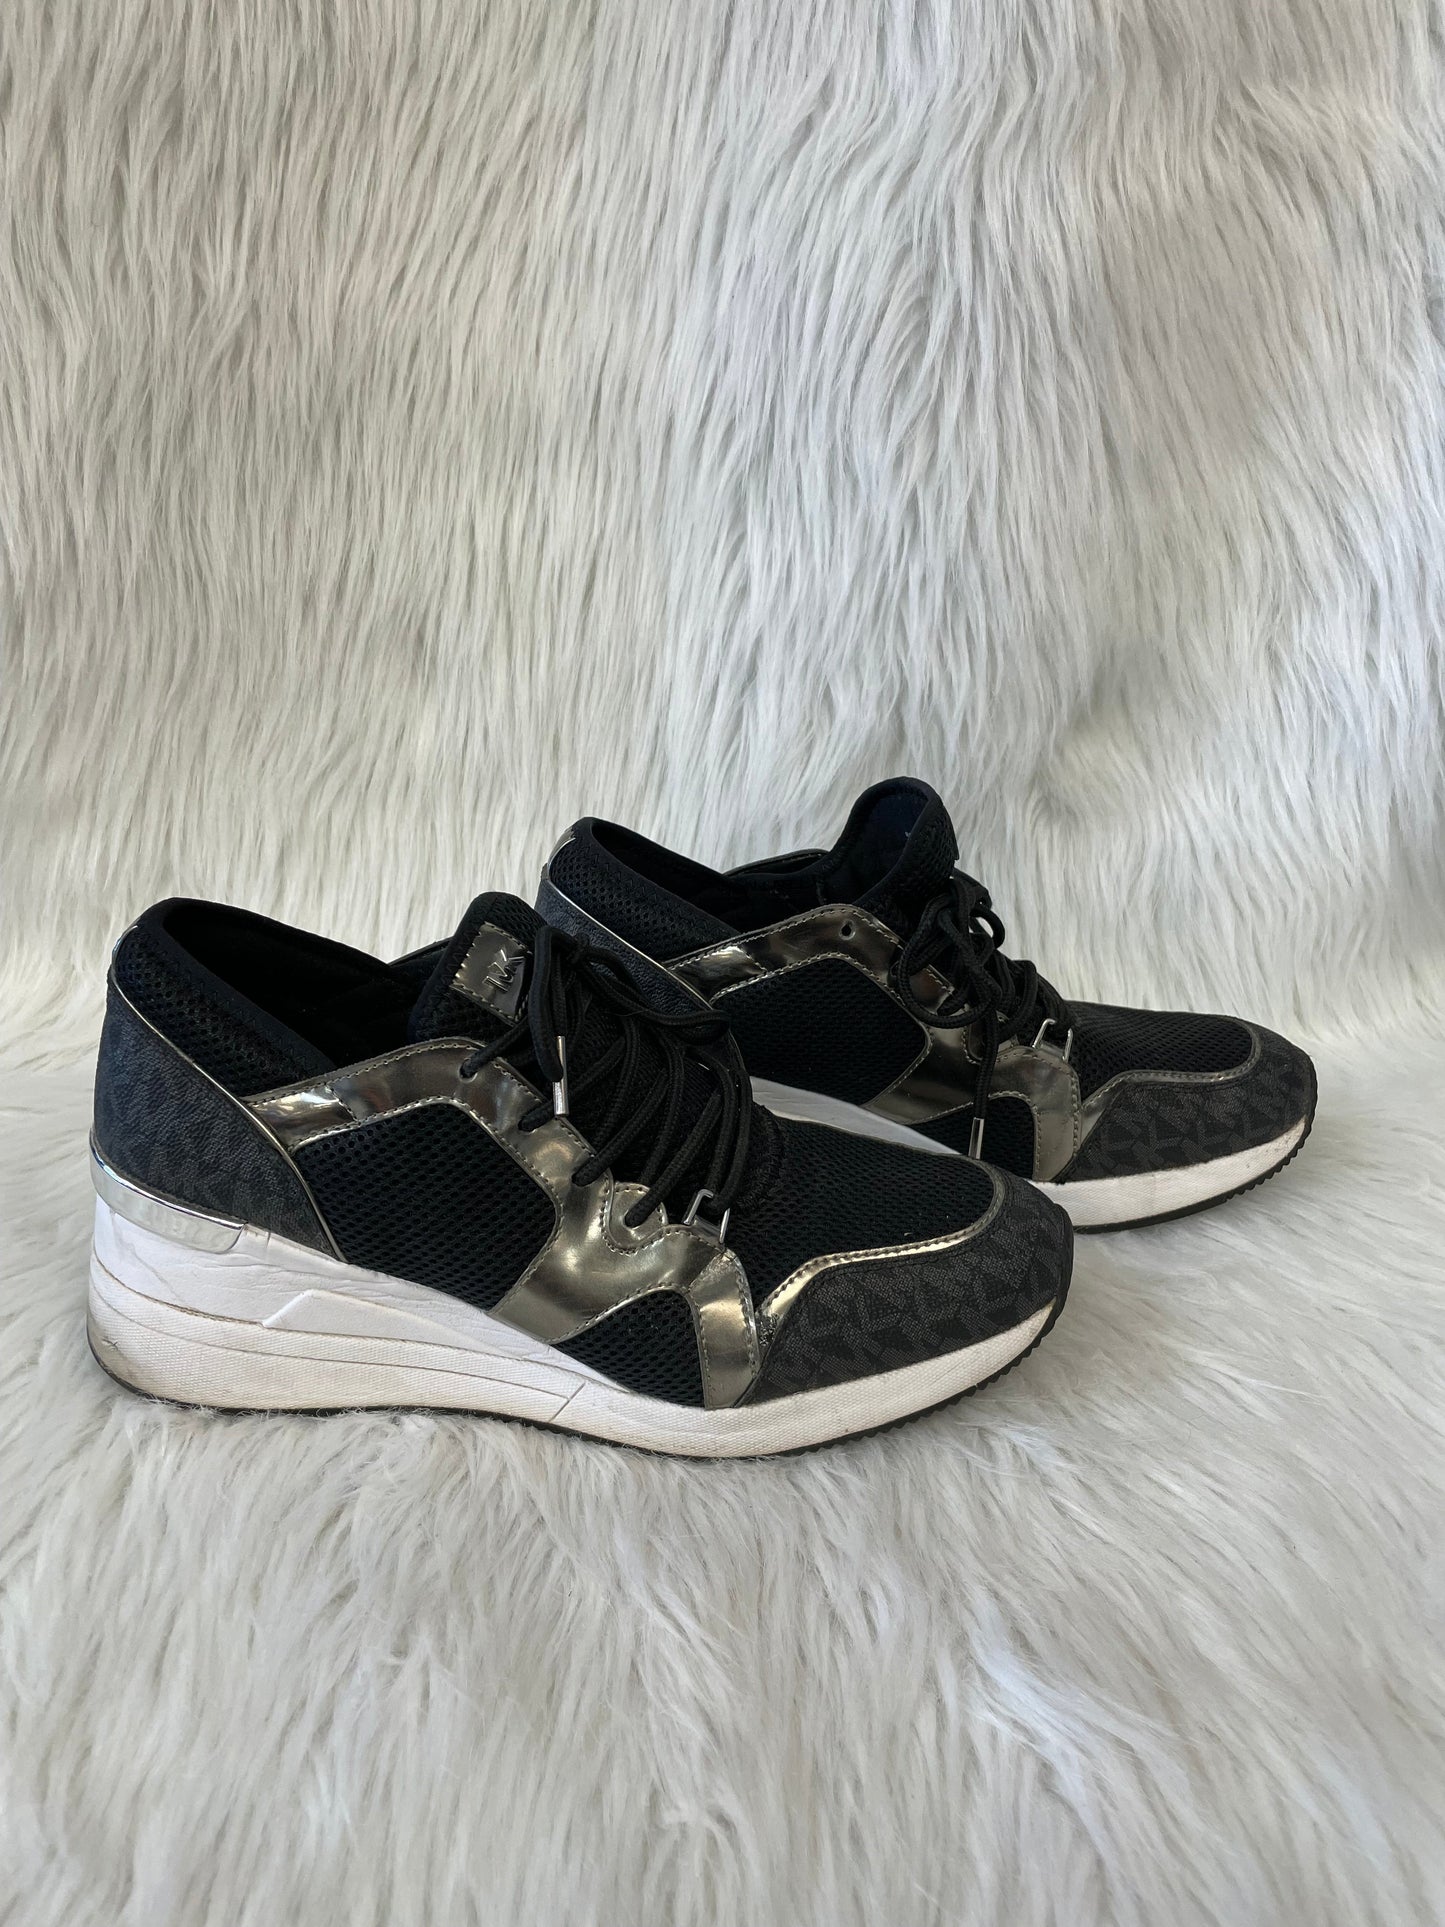 Black & Grey Shoes Designer Michael By Michael Kors, Size 10